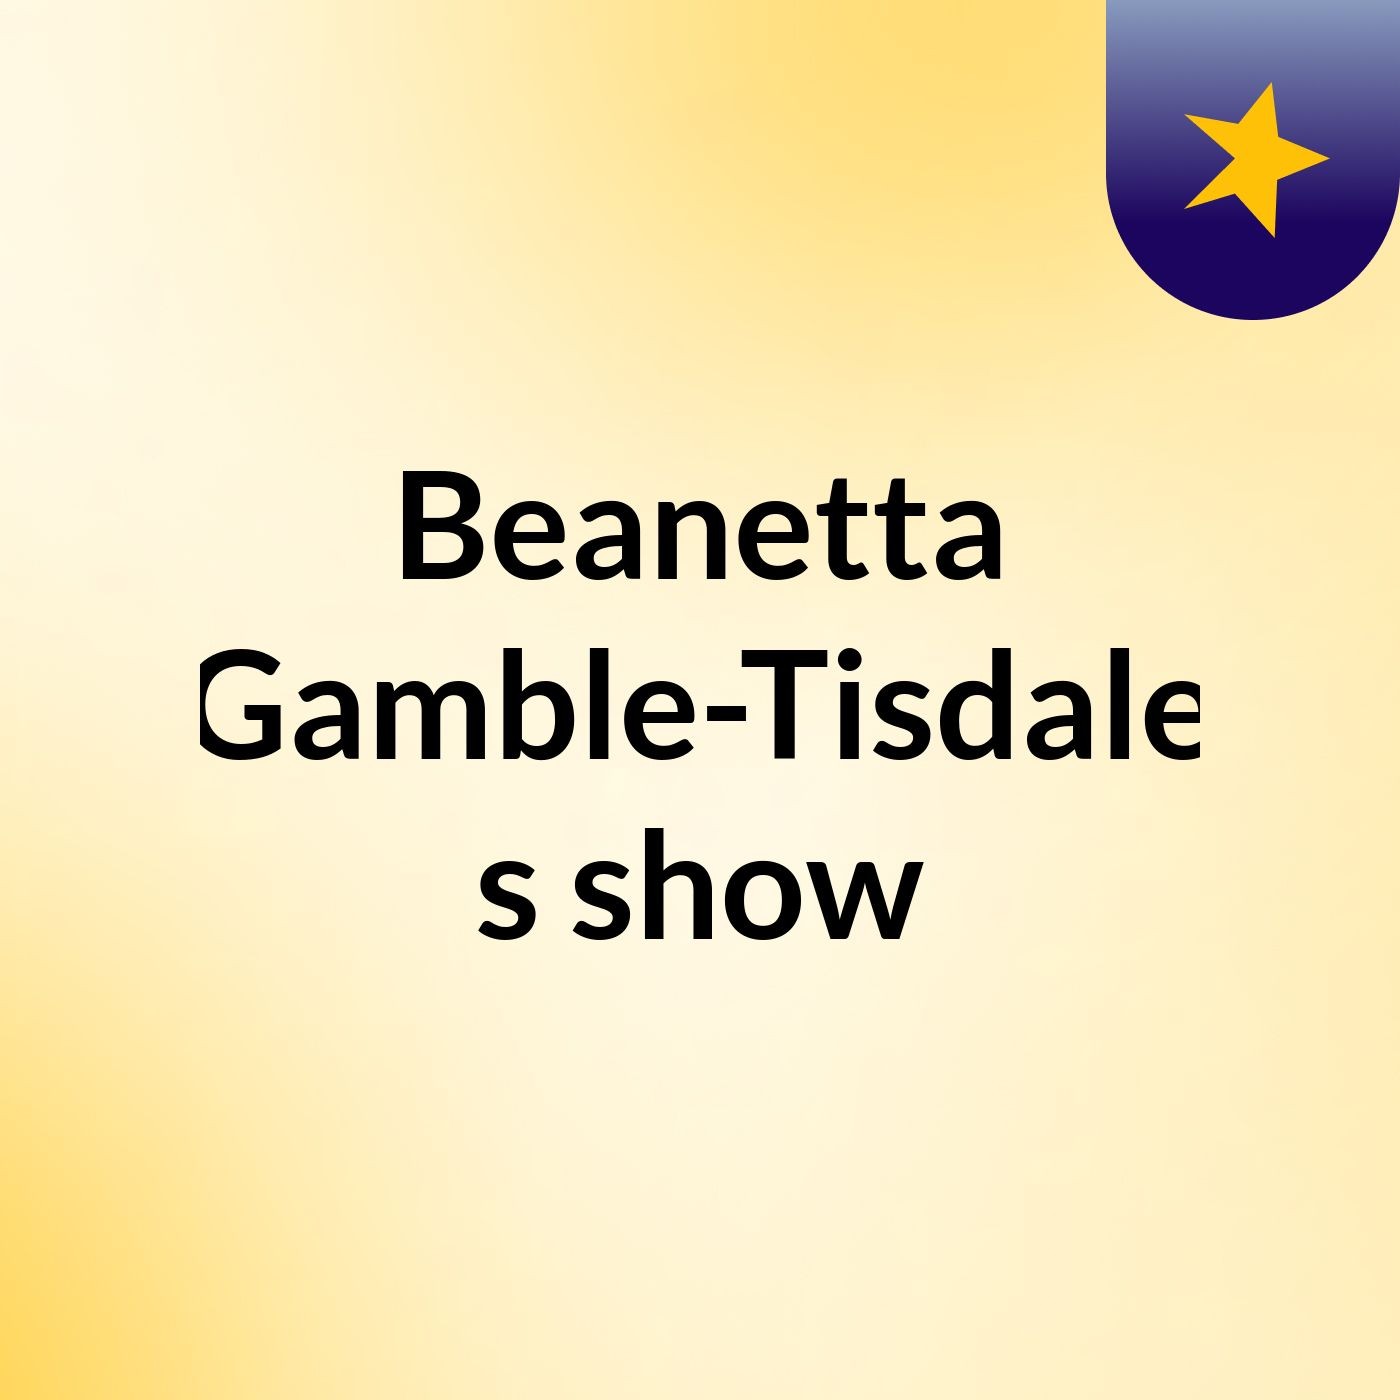 Beanetta Gamble-Tisdale's show